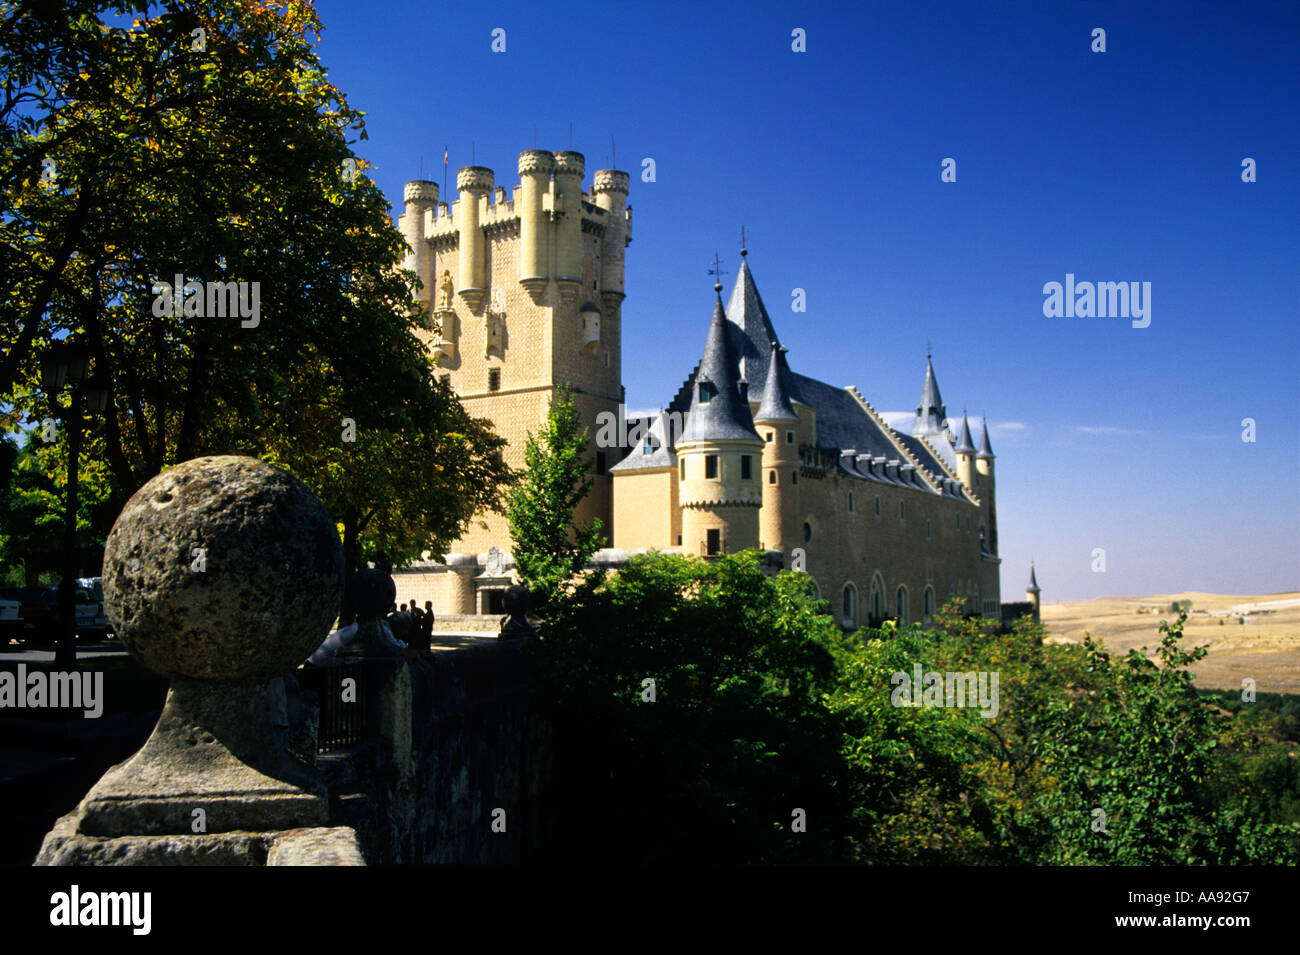 Segovia Alcazar Castle Castilla y Leon Spain Europe EU Stock Photo